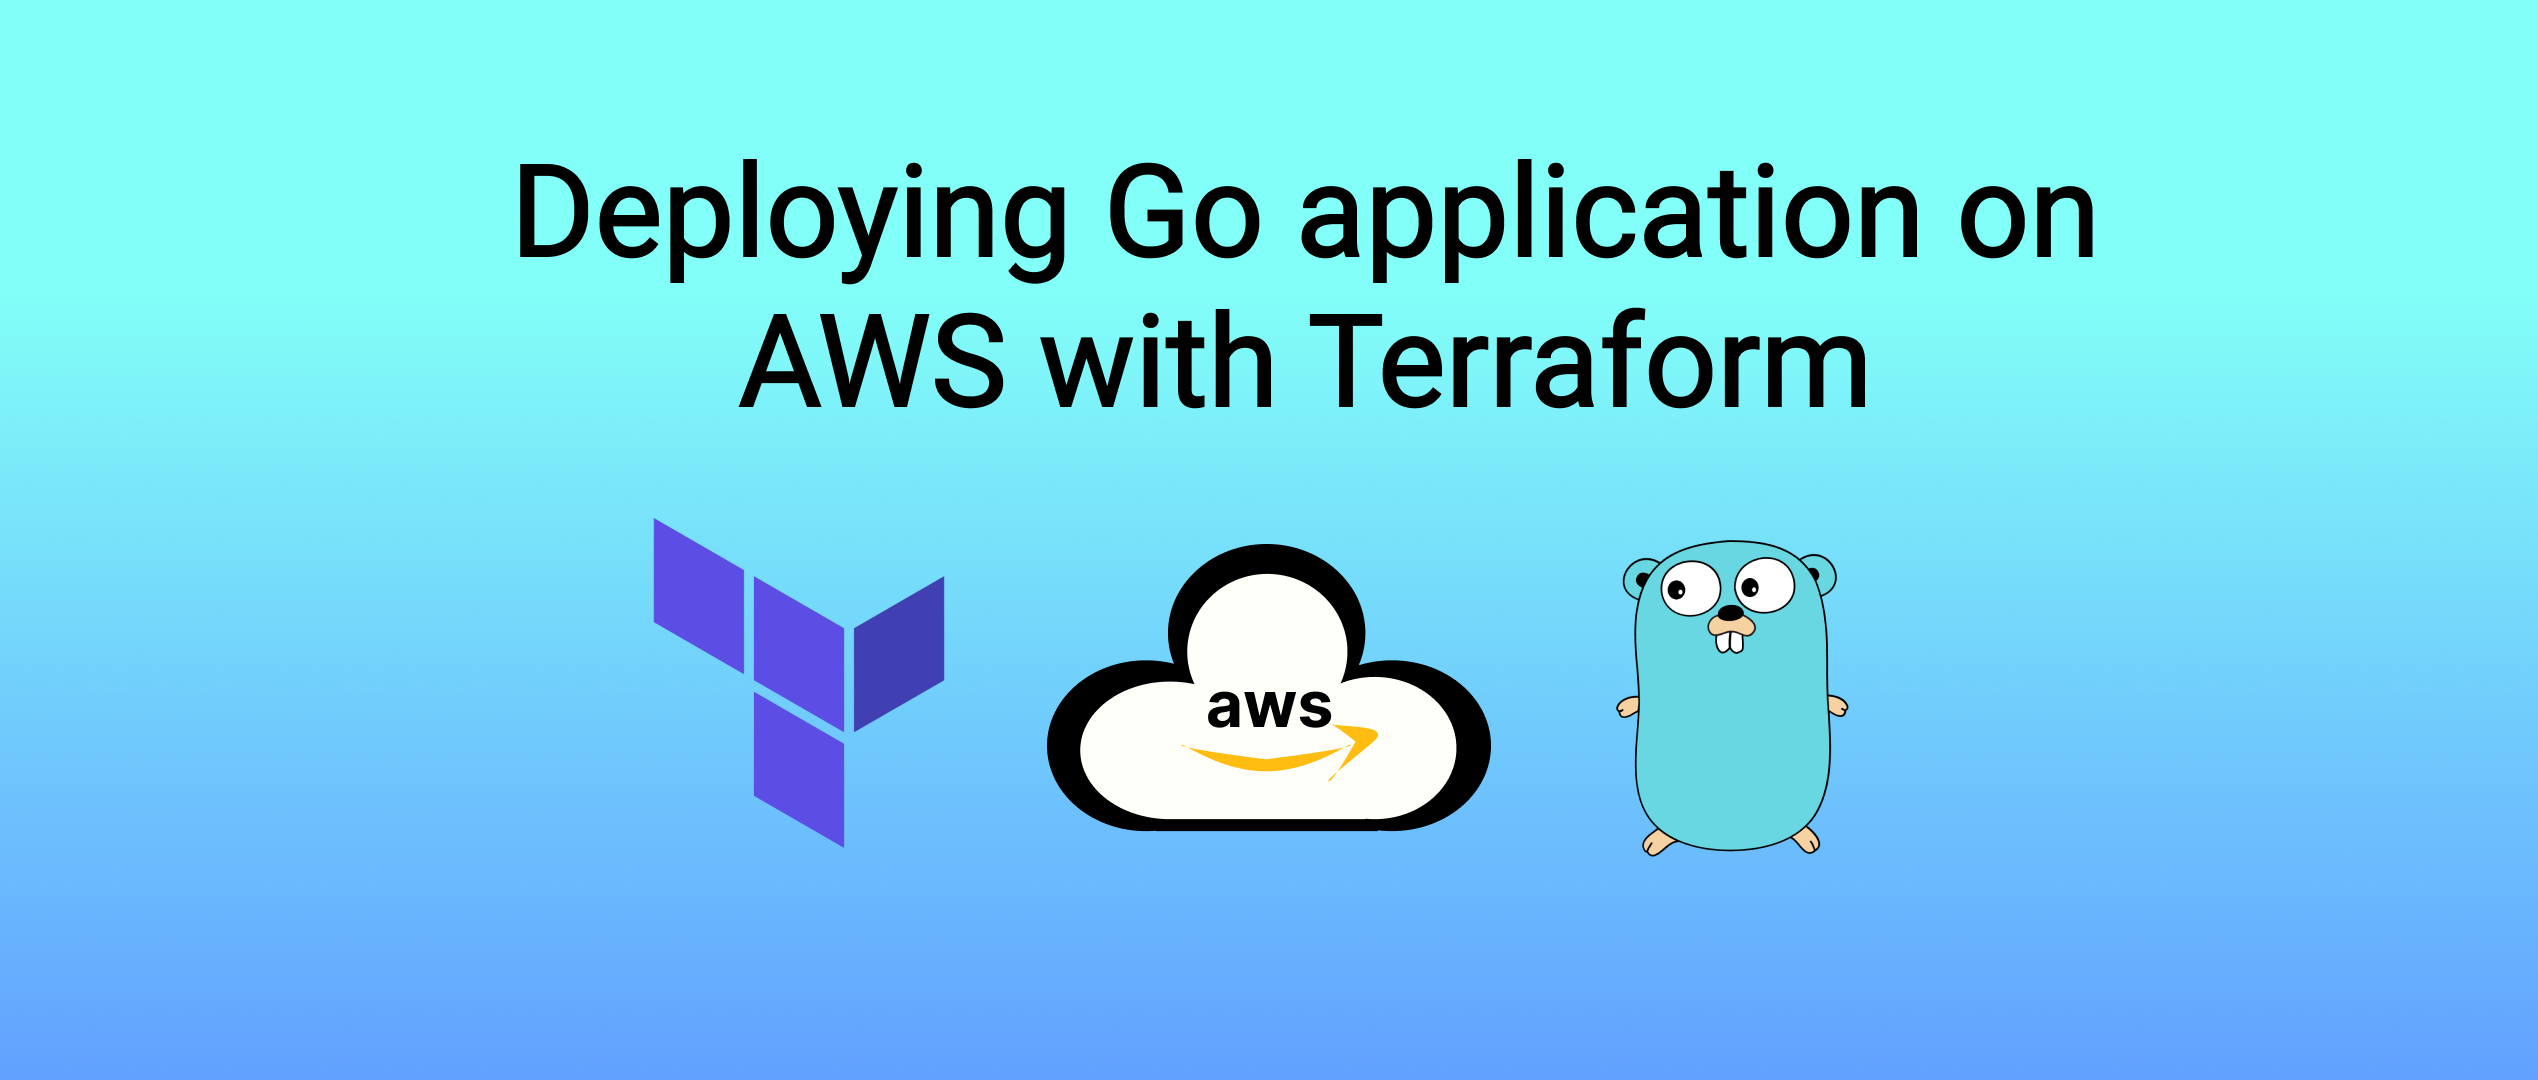 Deploying Go application on AWS with terraform